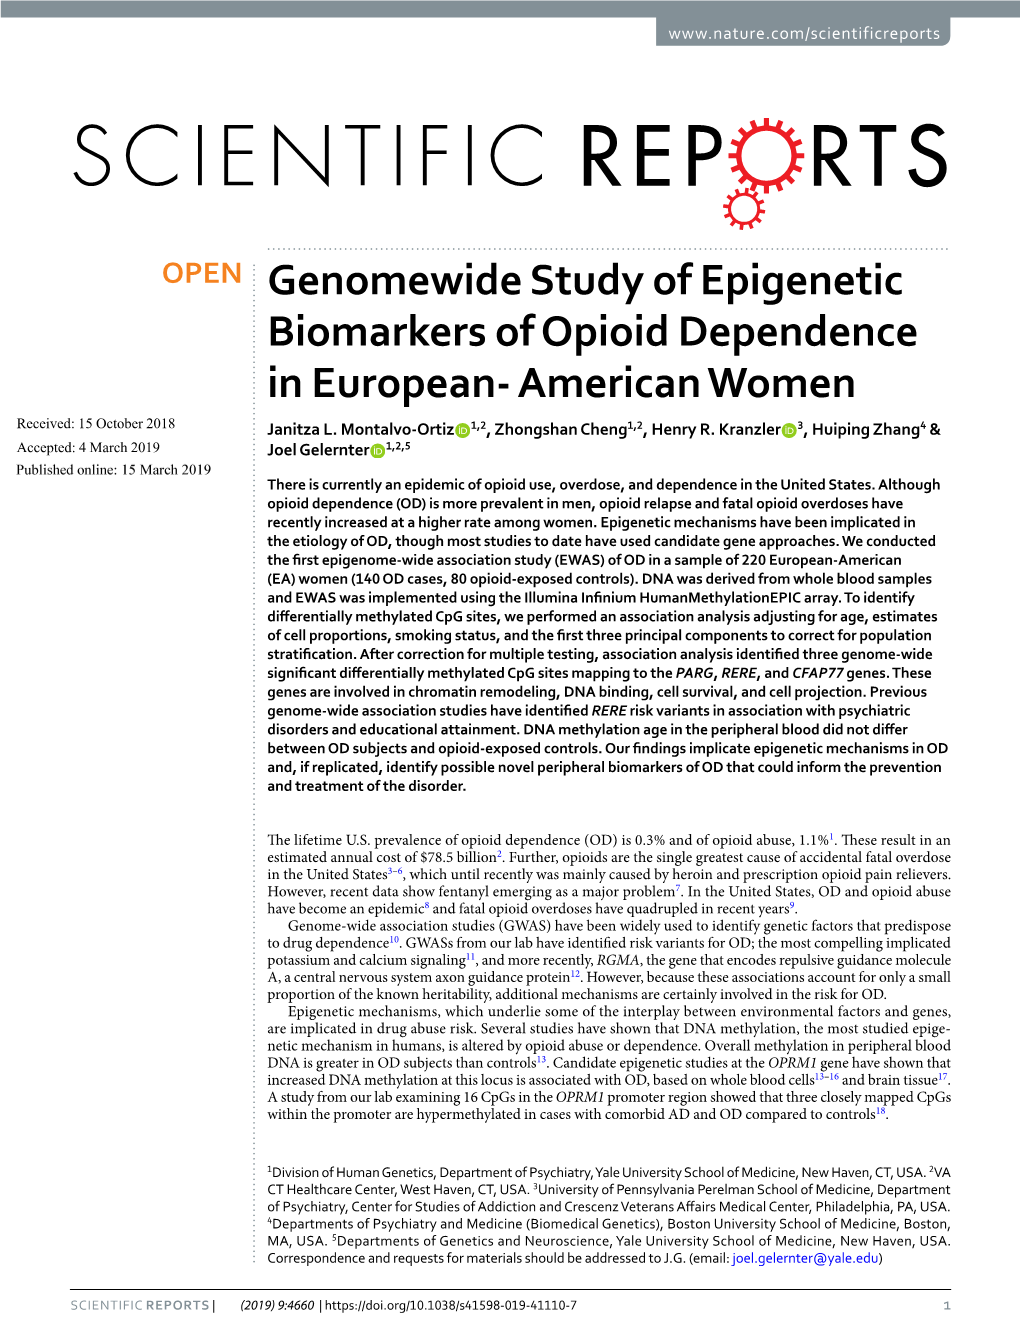 Genomewide Study of Epigenetic Biomarkers of Opioid Dependence in European- American Women Received: 15 October 2018 Janitza L